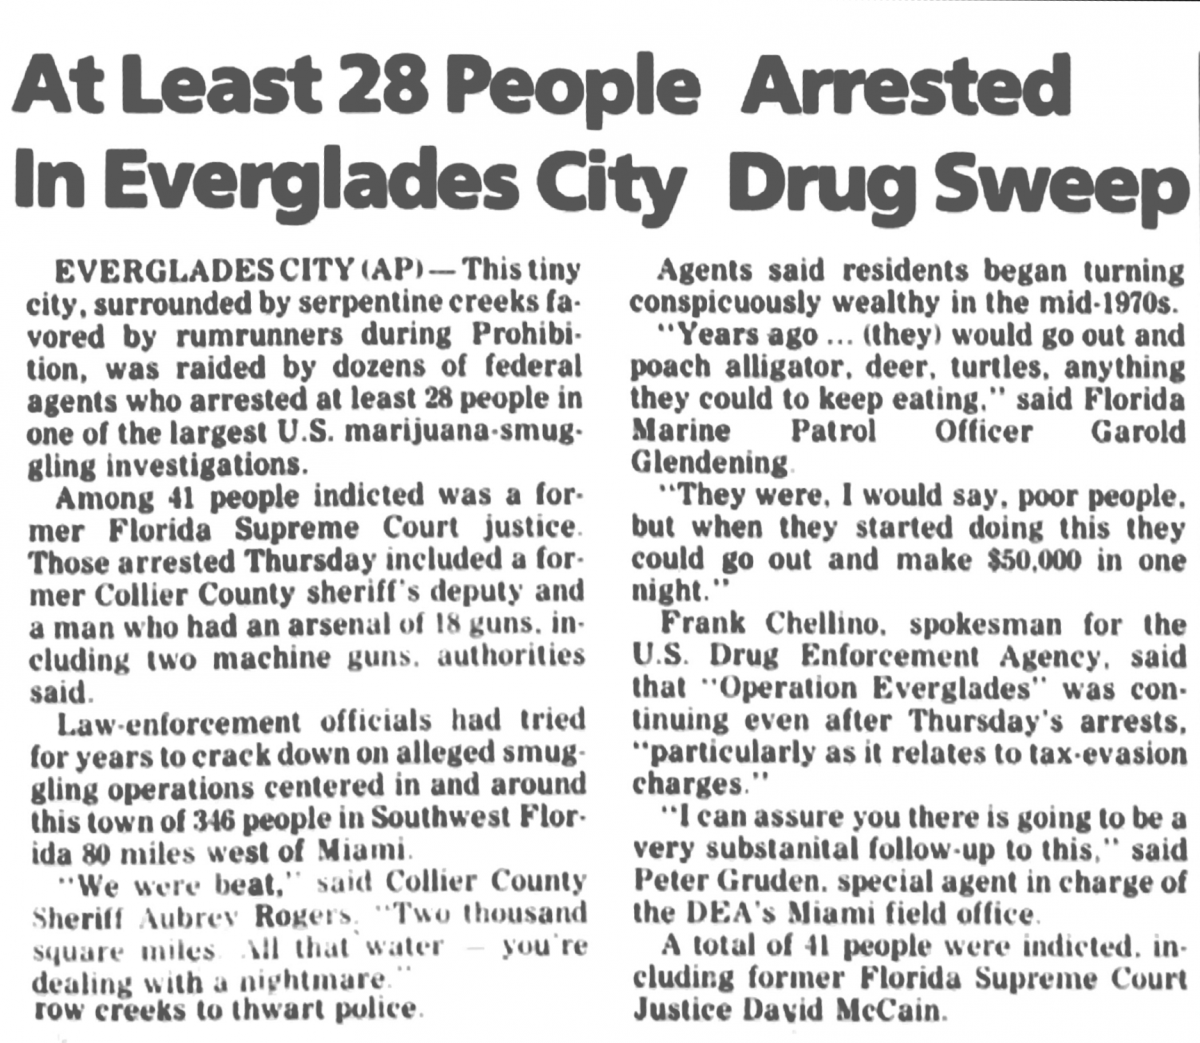 HEADLINE: At Least 28 People Arrested In Everglades City Drug Sweep